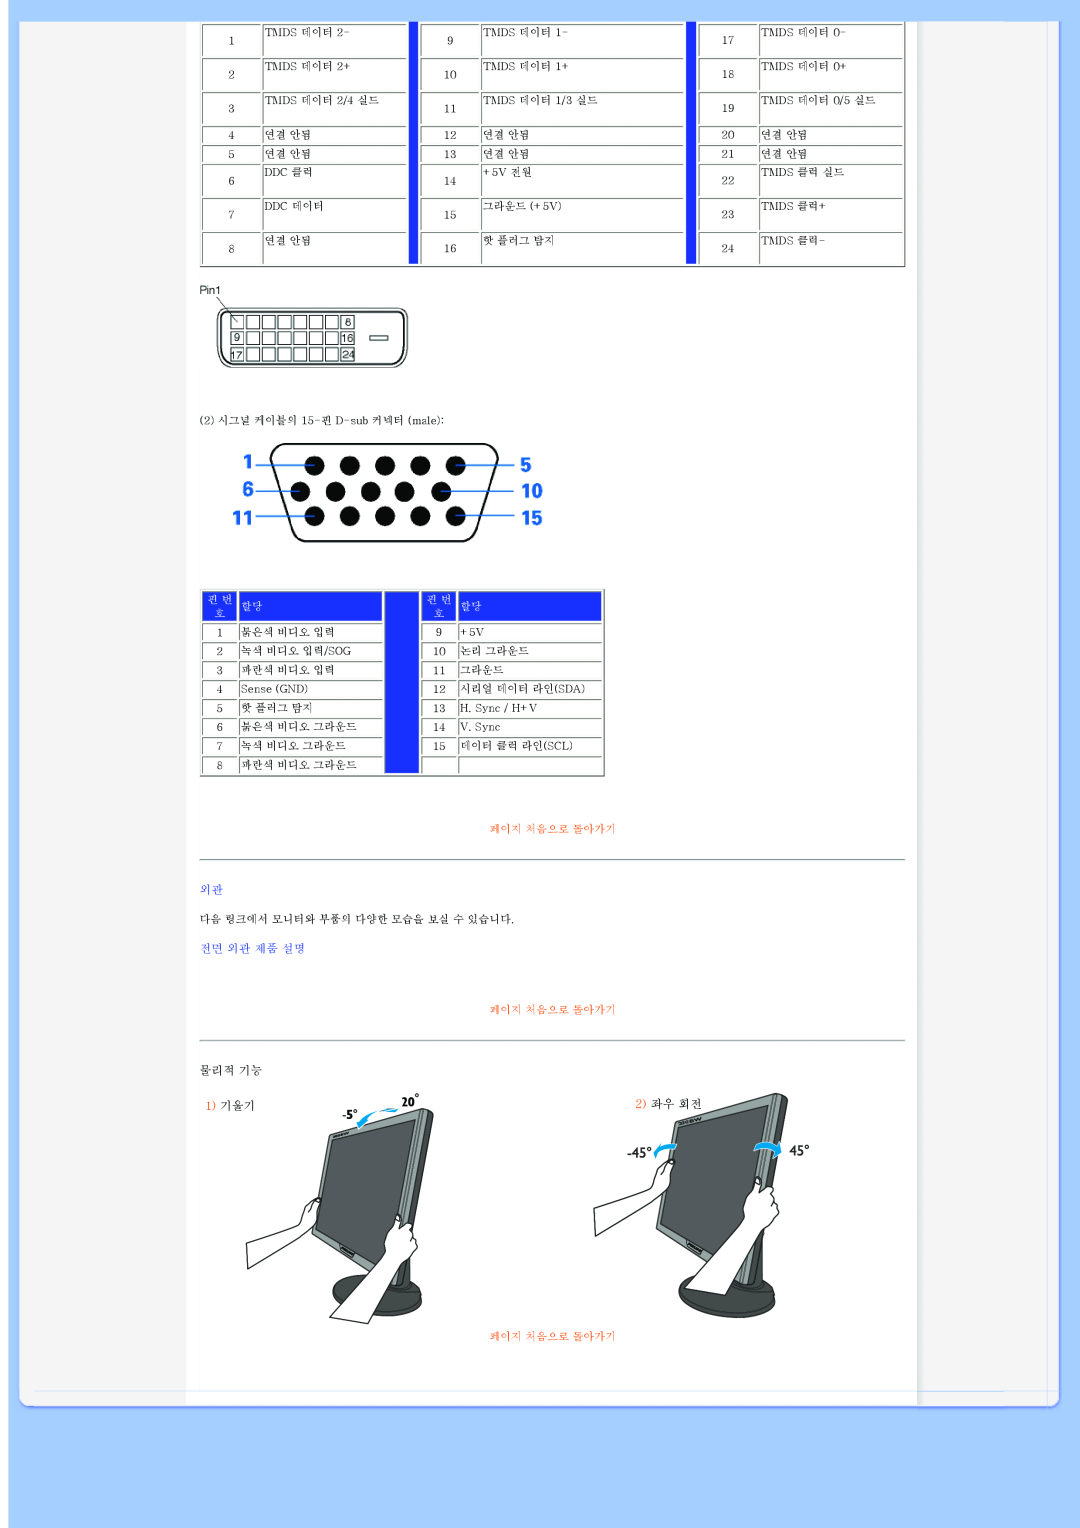 Univex 200BW8 user manual 전면 외관 제품 설명, 1 기울기, 2 좌우 회전, 페이지 처음으로 돌아가기, 물리적 기능 